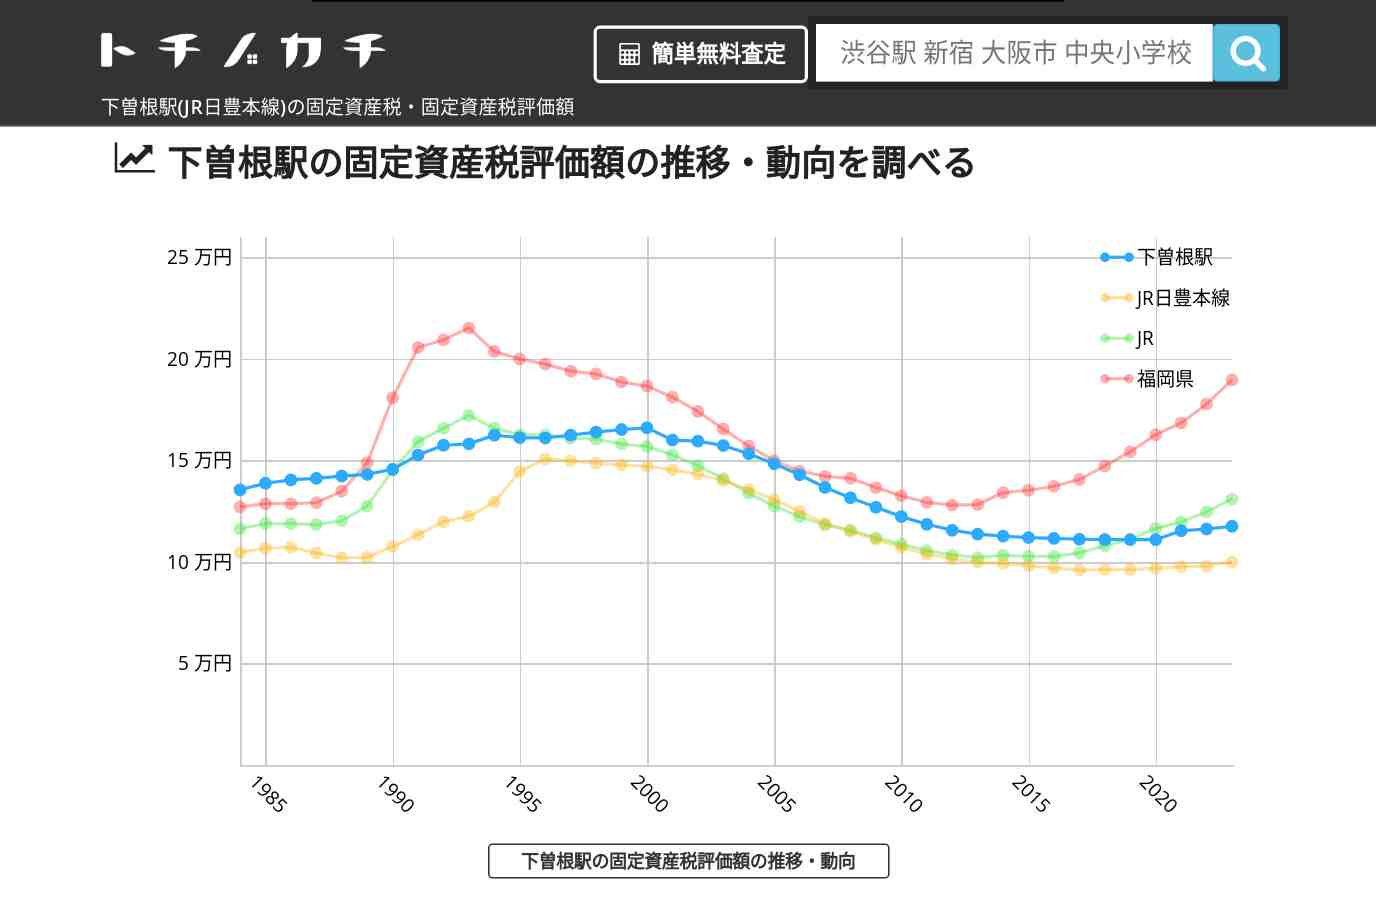 下曽根駅(JR日豊本線)の固定資産税・固定資産税評価額 | トチノカチ